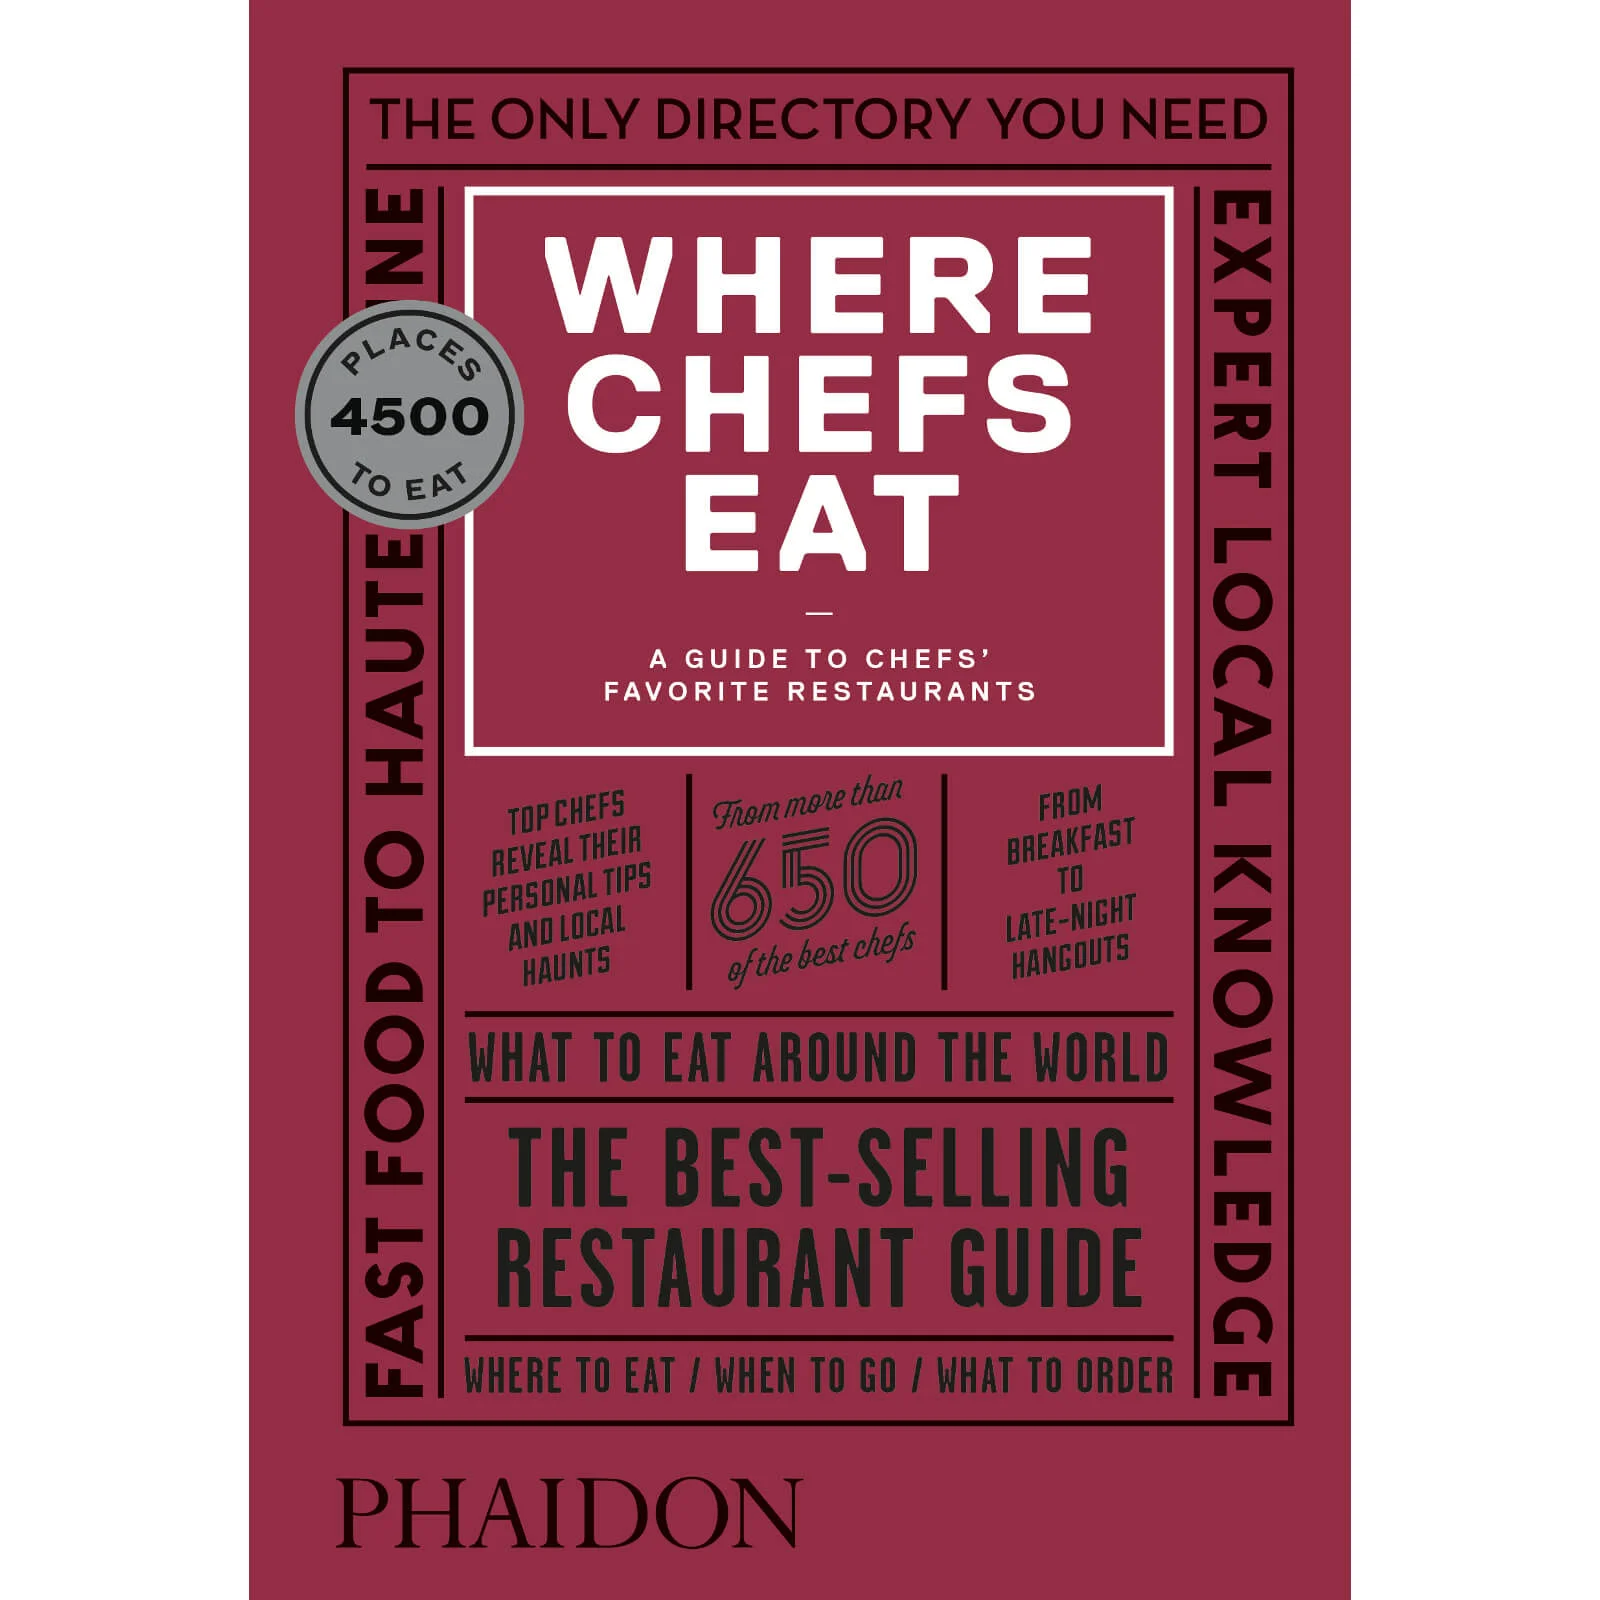 Phaidon: Where Chefs Eat (Third Edition) Image 1